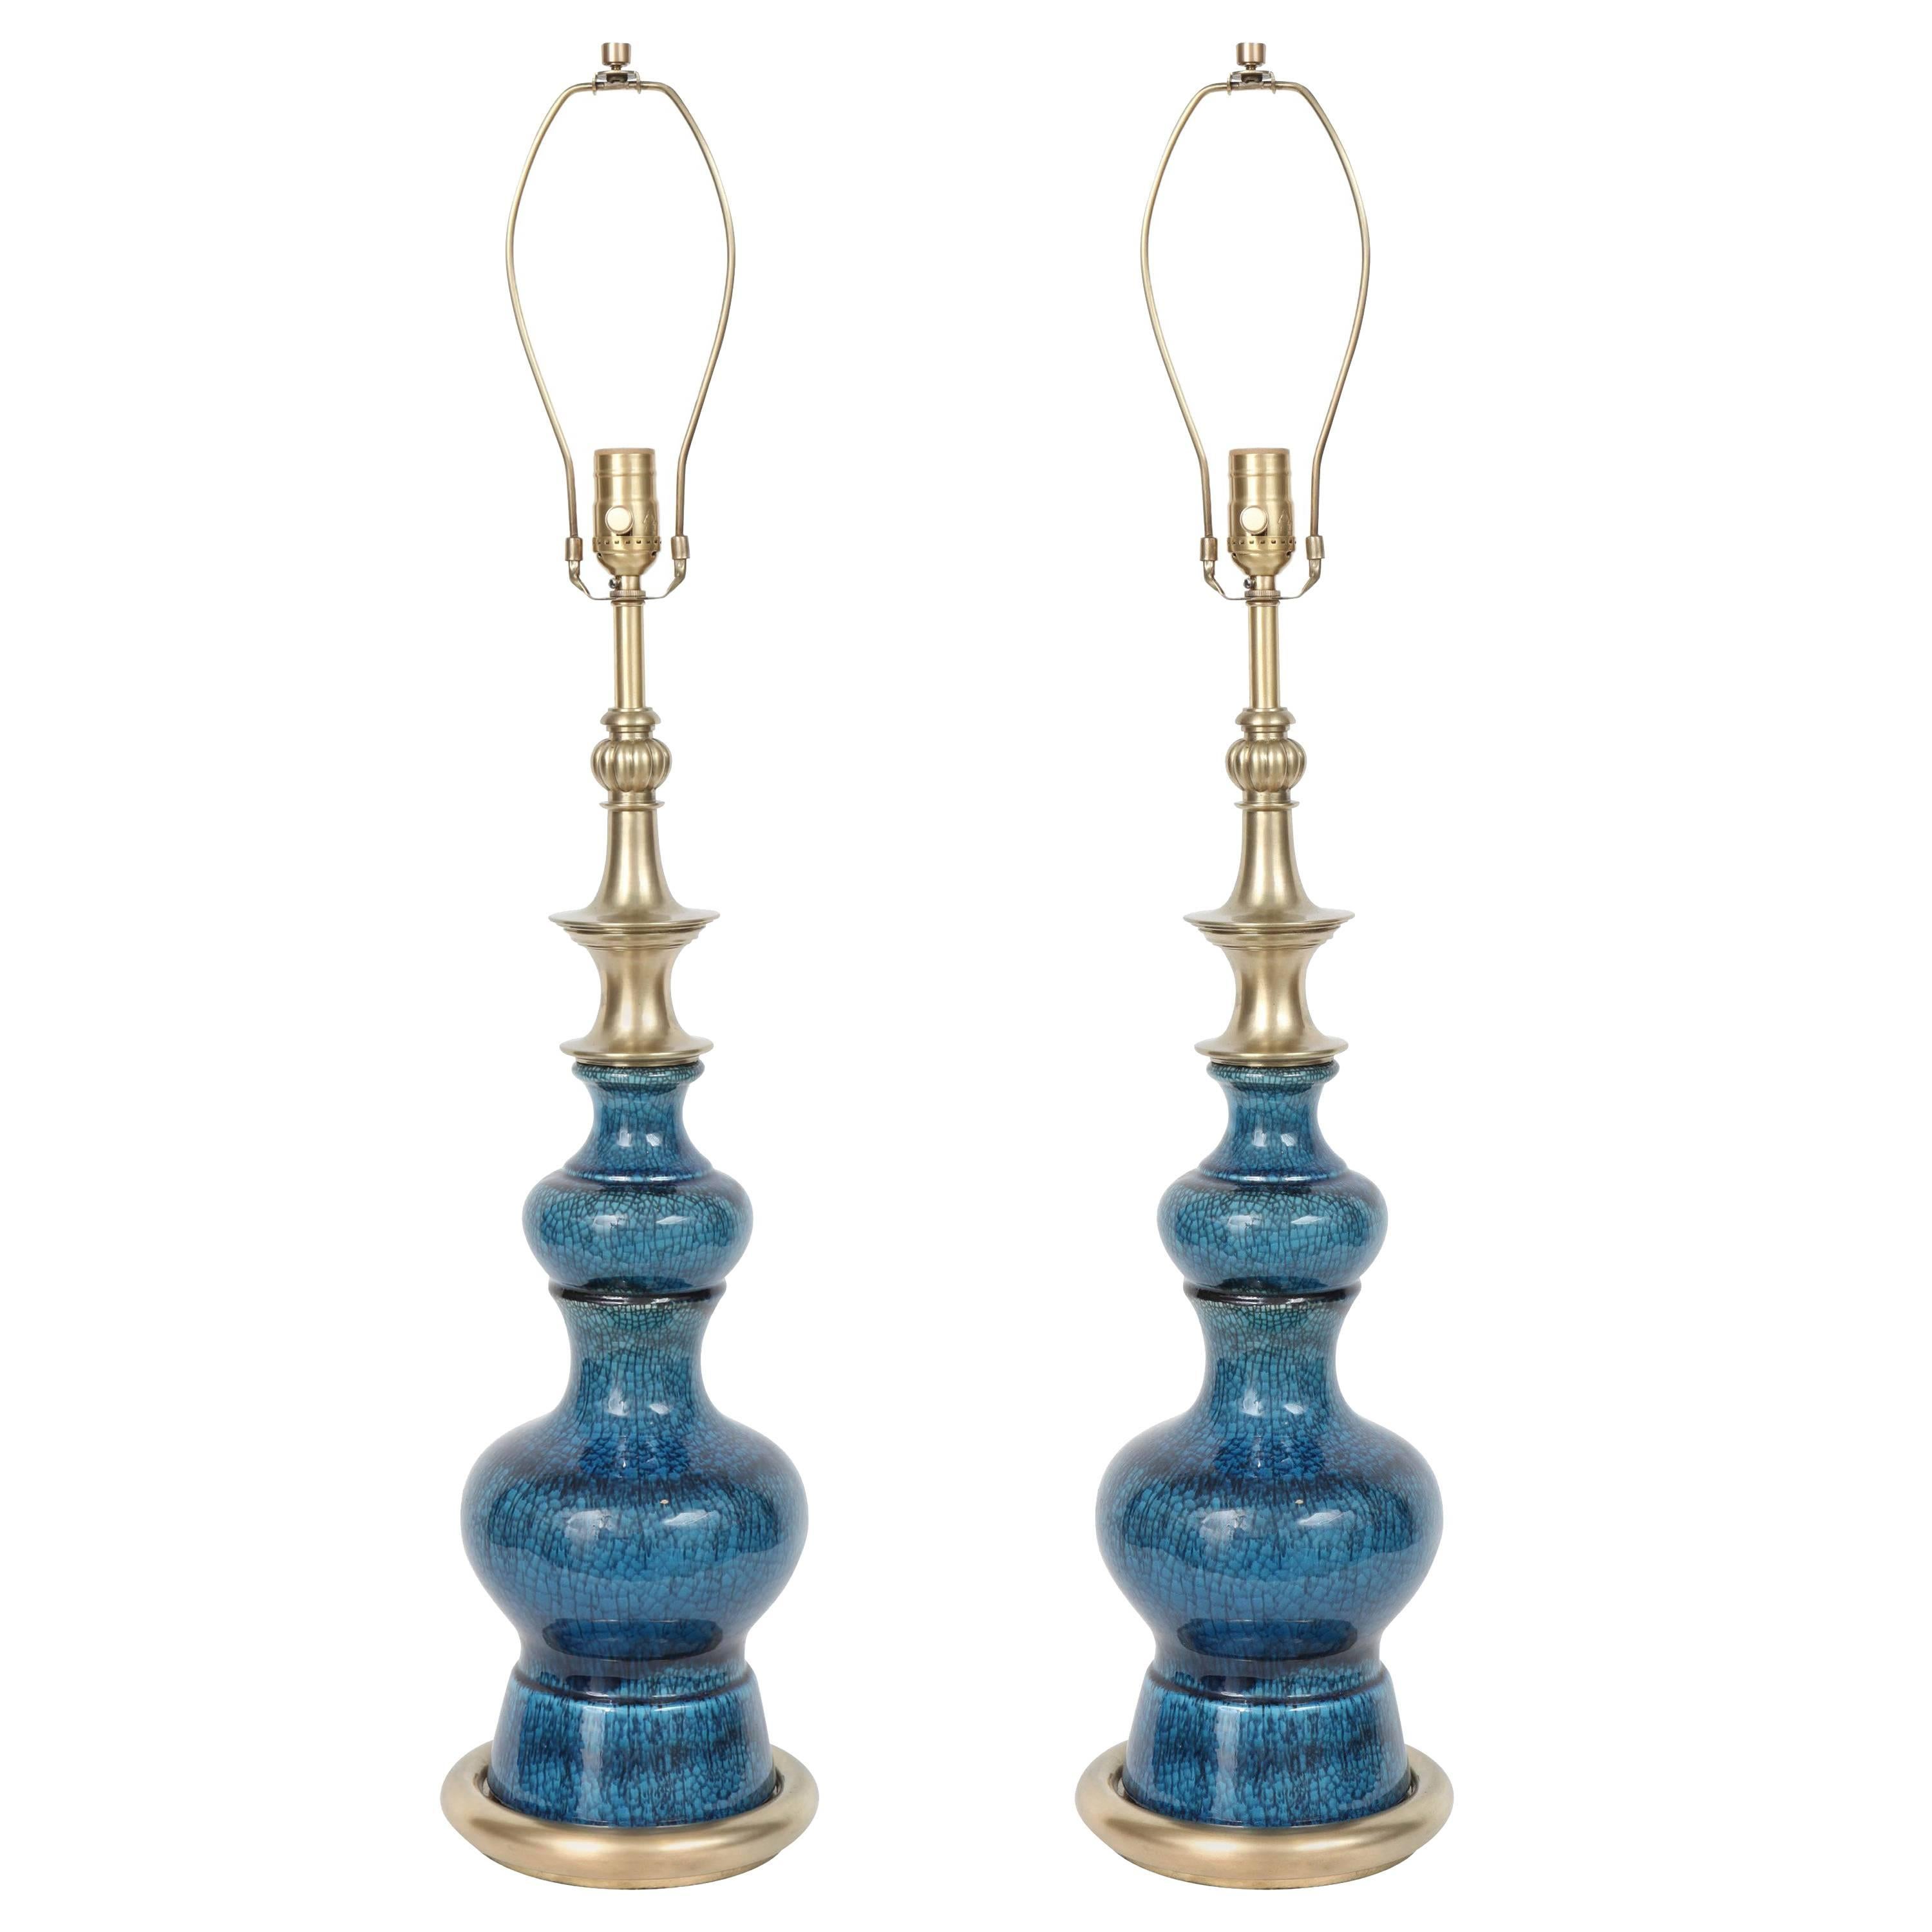 Stiffel Blue Crackled Glazed Lamps